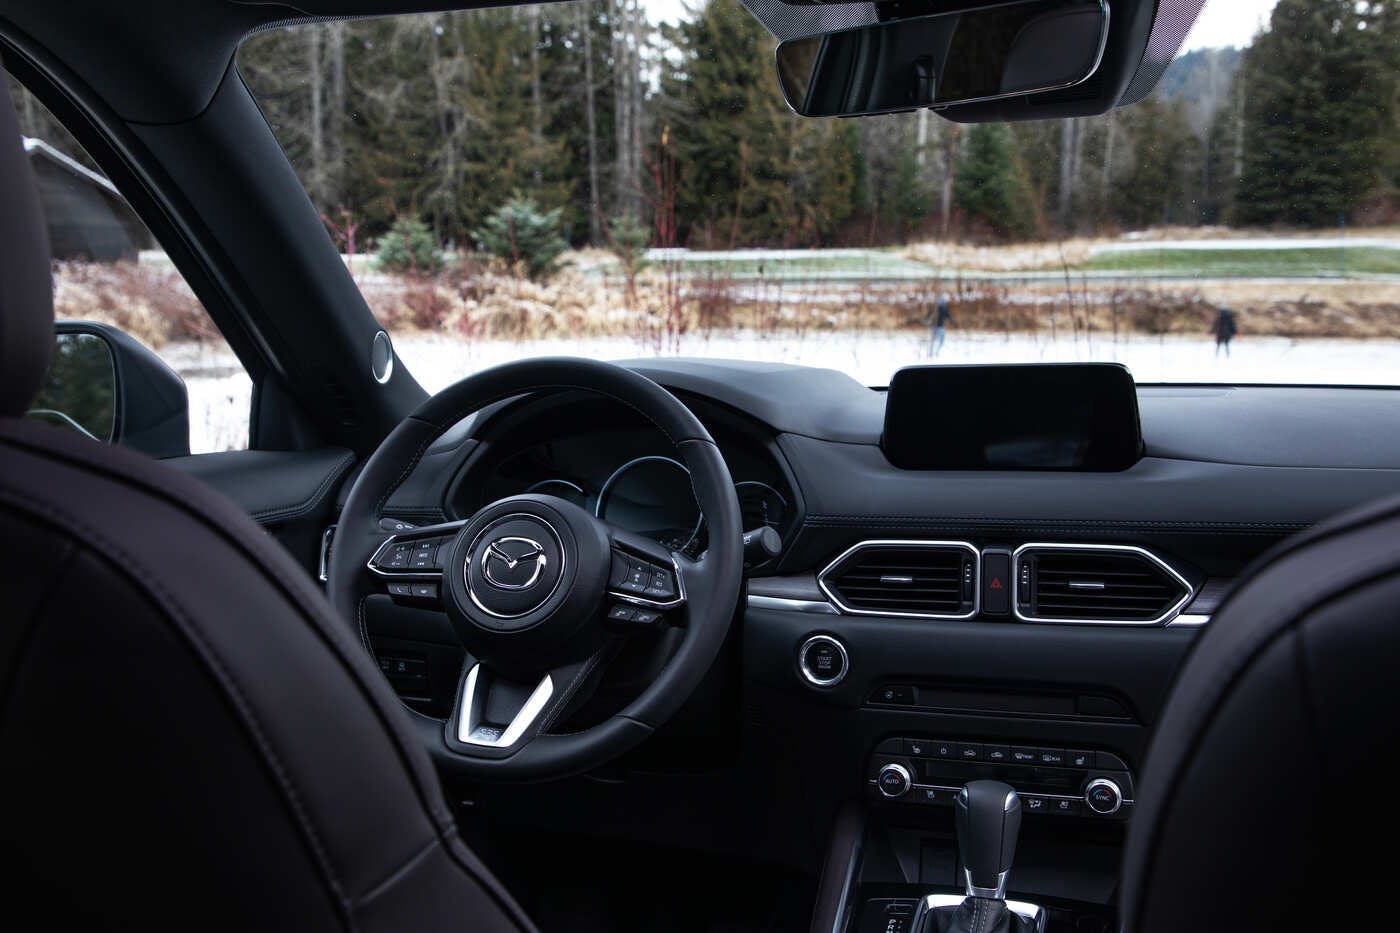 2020 Mazda Cx 5 Comparisons Reviews Pictures Truecar